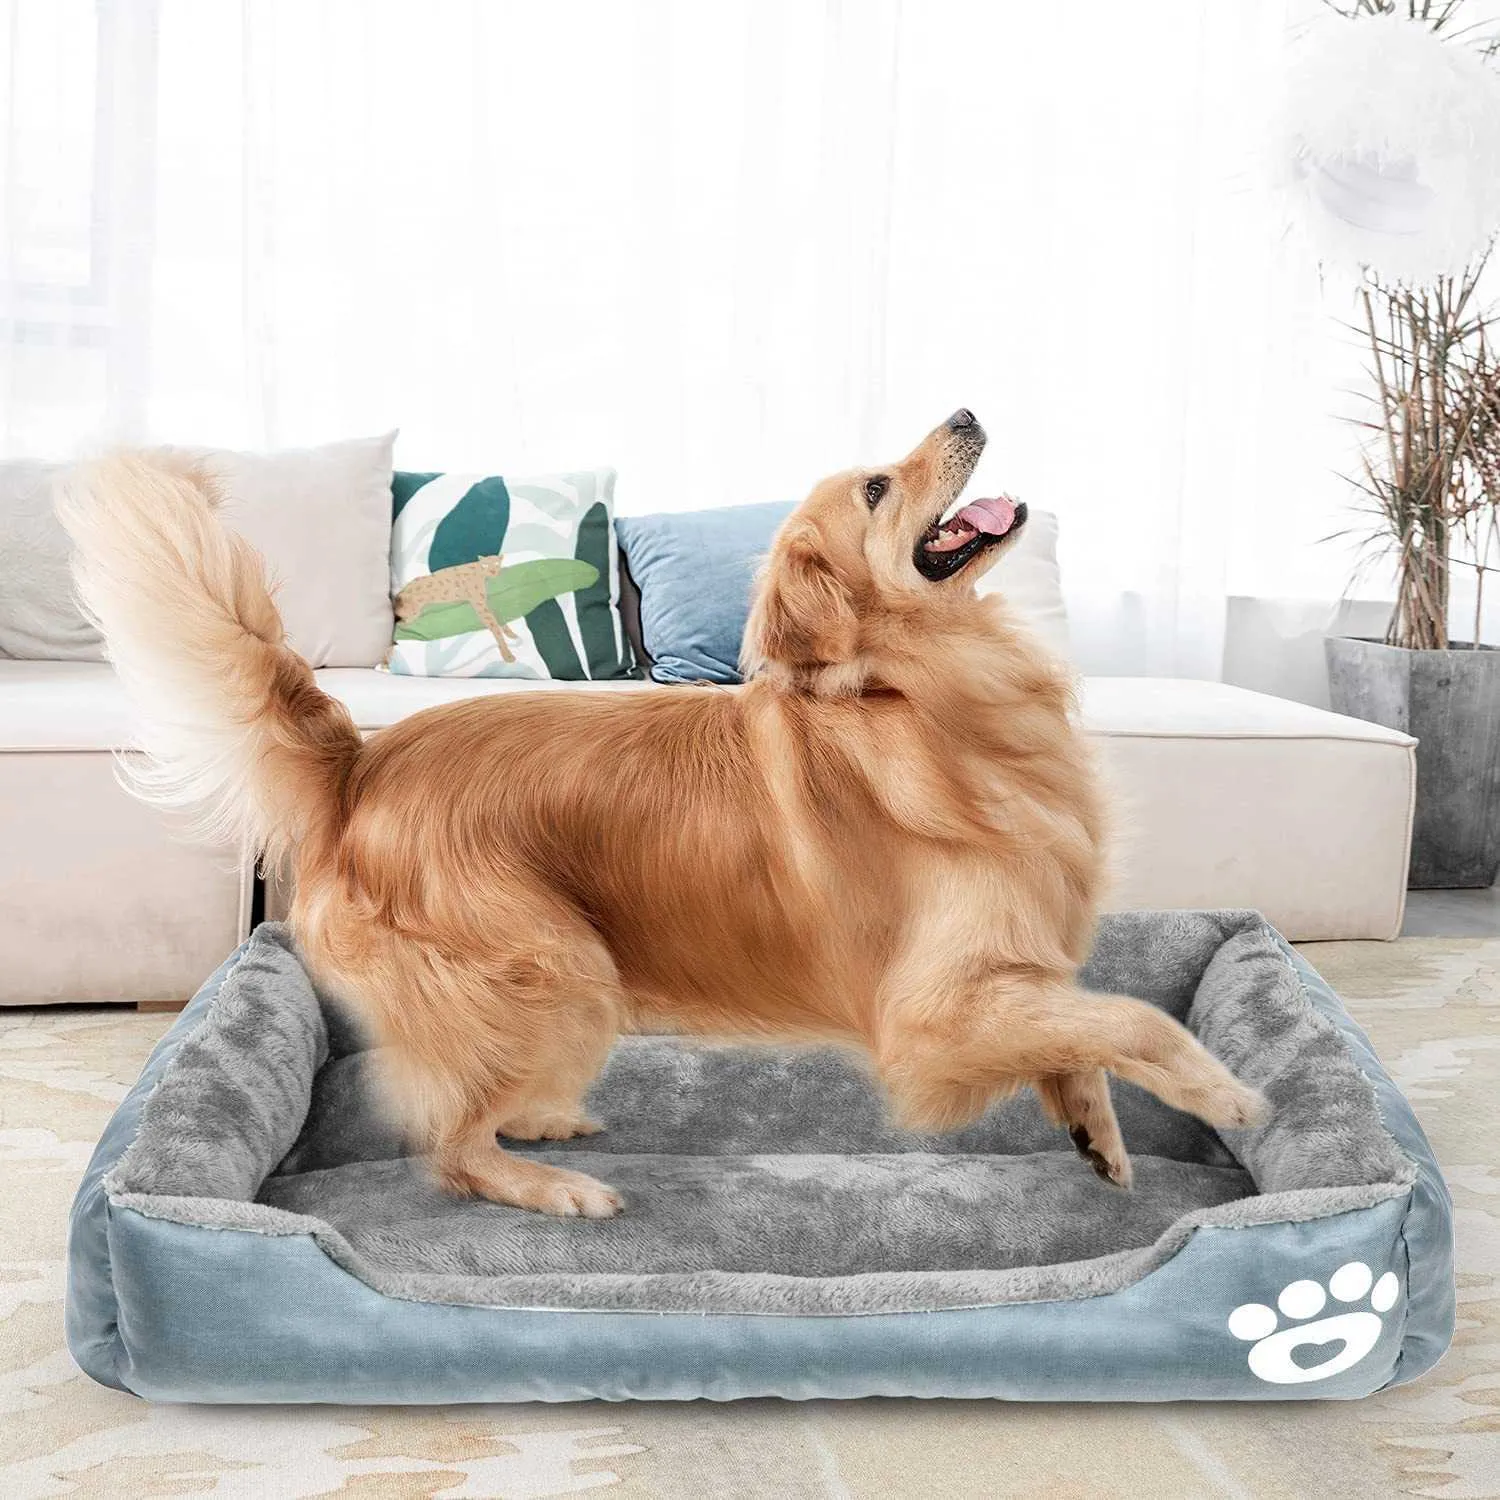 XXLペット犬ベッドソファーソフト洗えるバスケット秋冬暖かい豪華なパッド防水ベッド大型S 211021